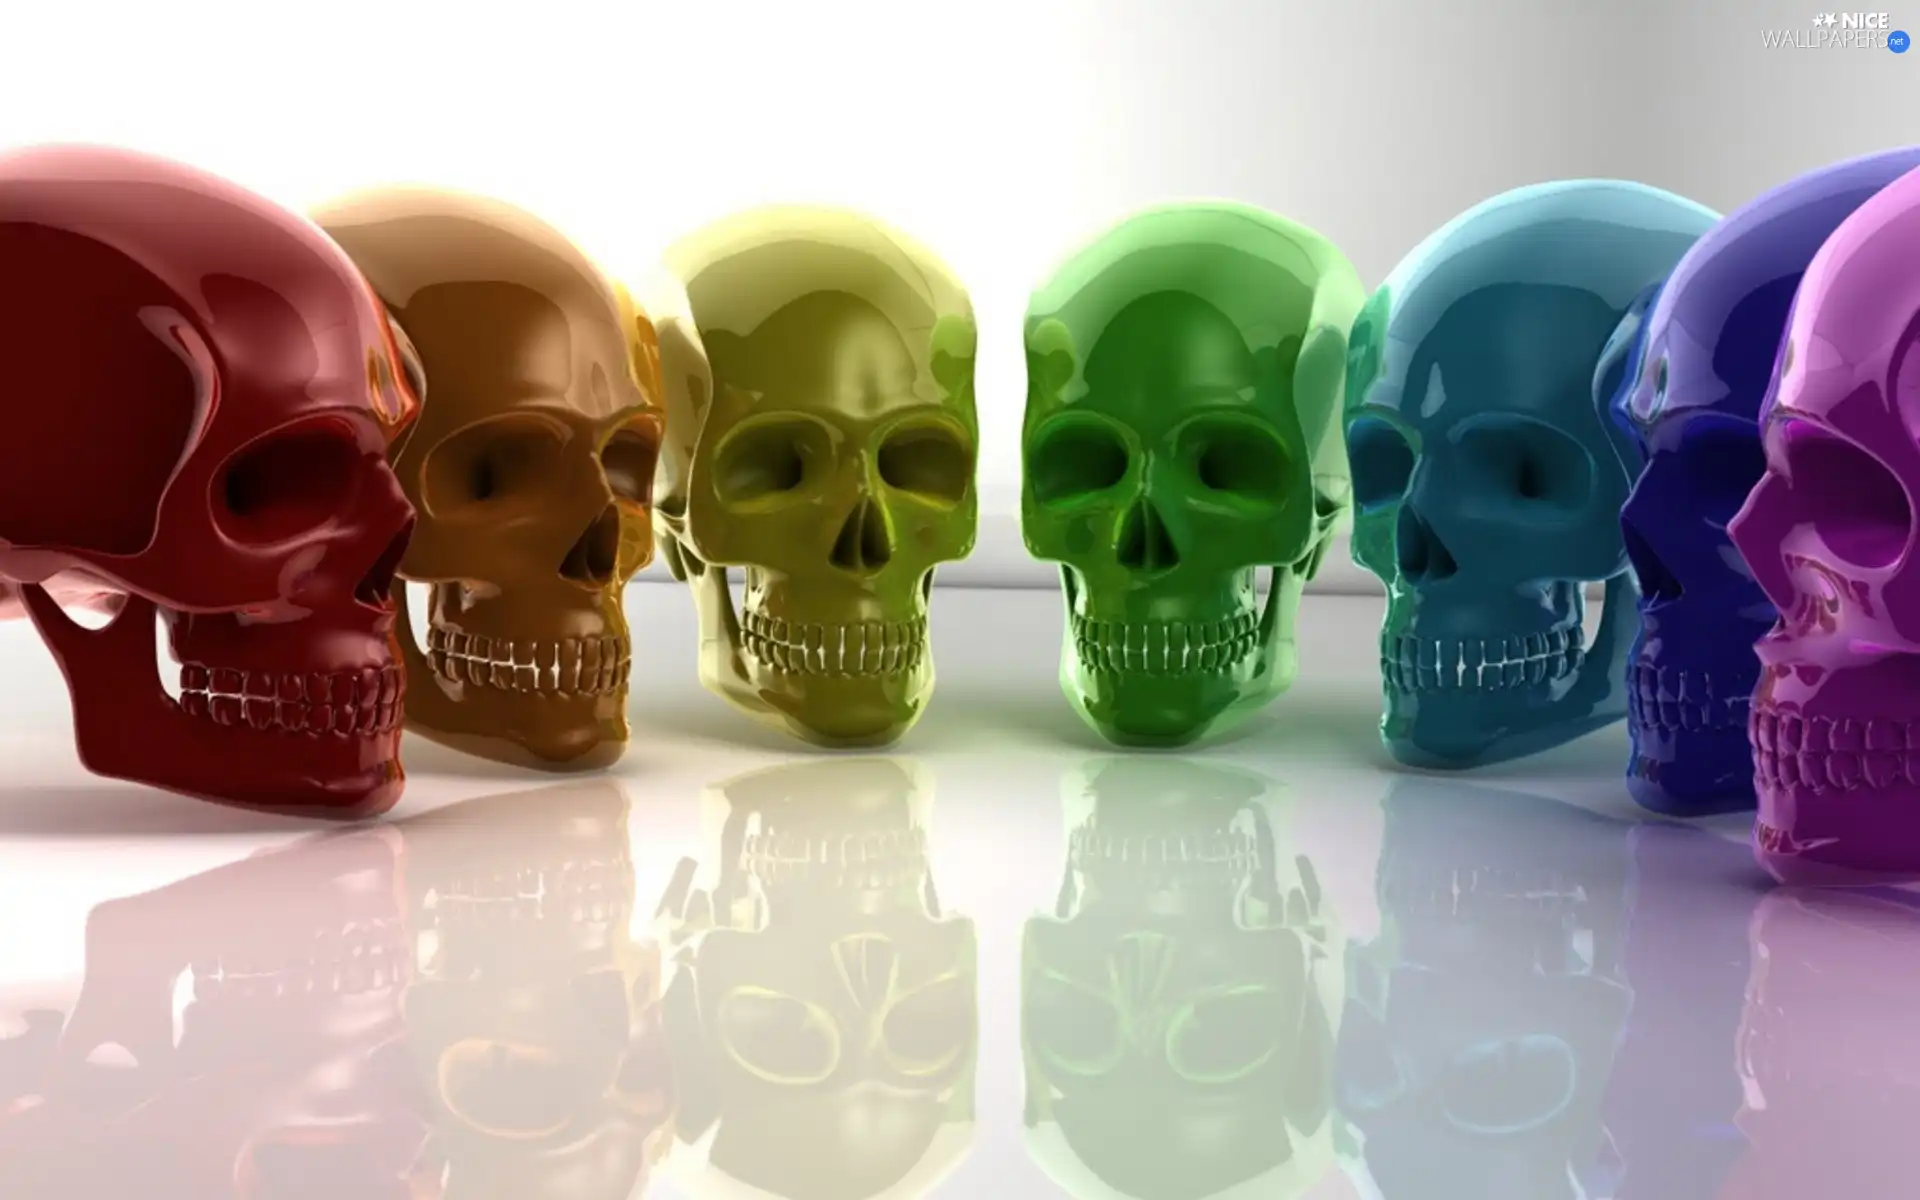 color, the skull